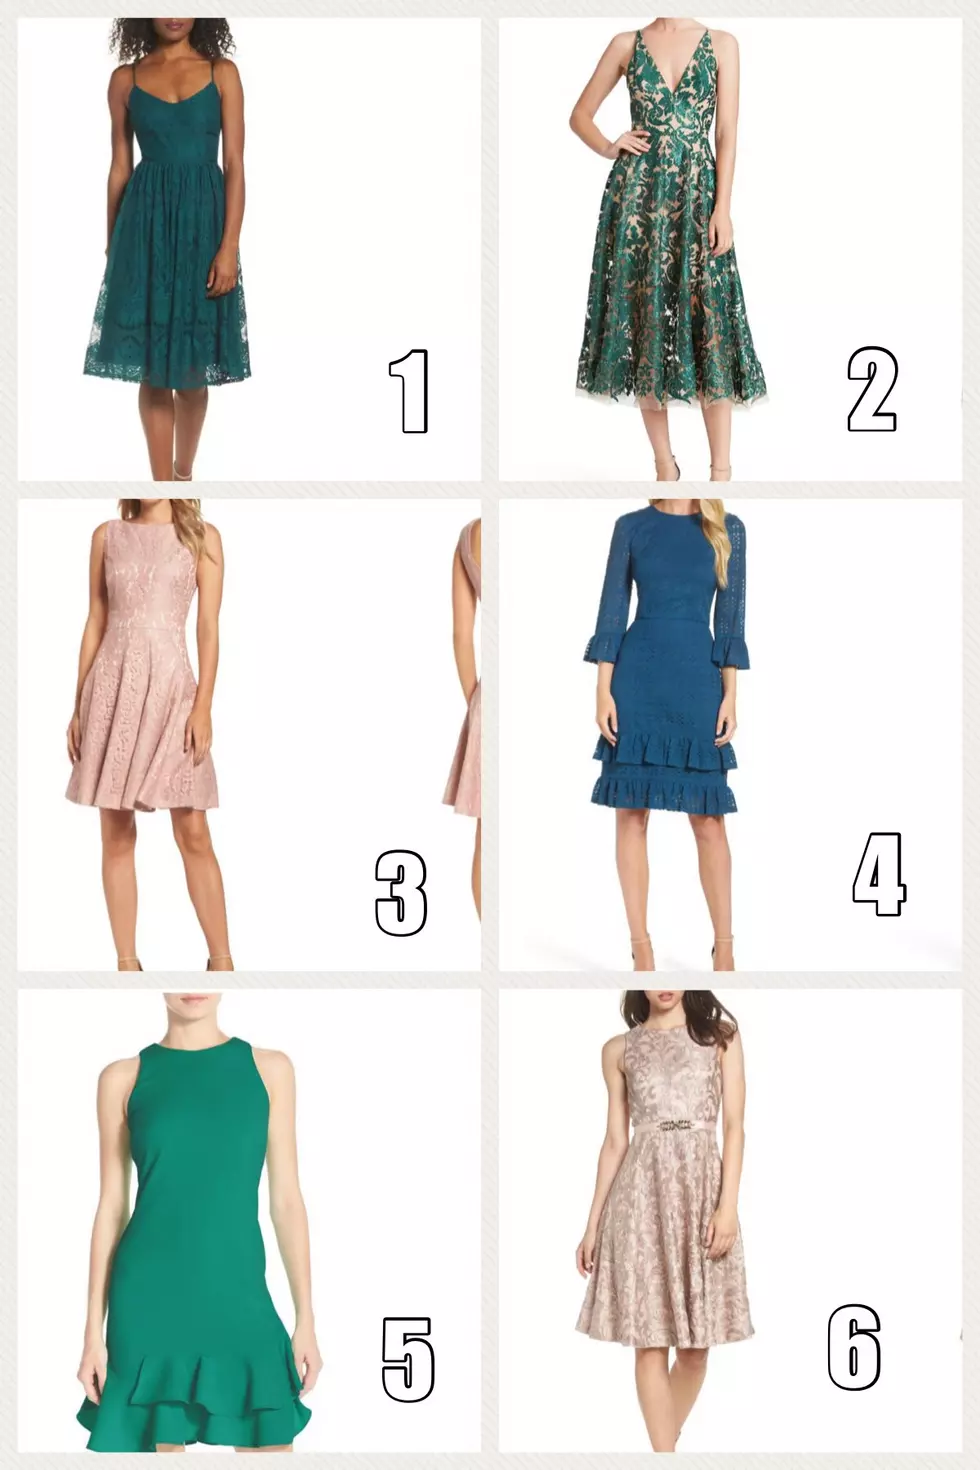 Which Graduation Dress Should Danielle Wear?